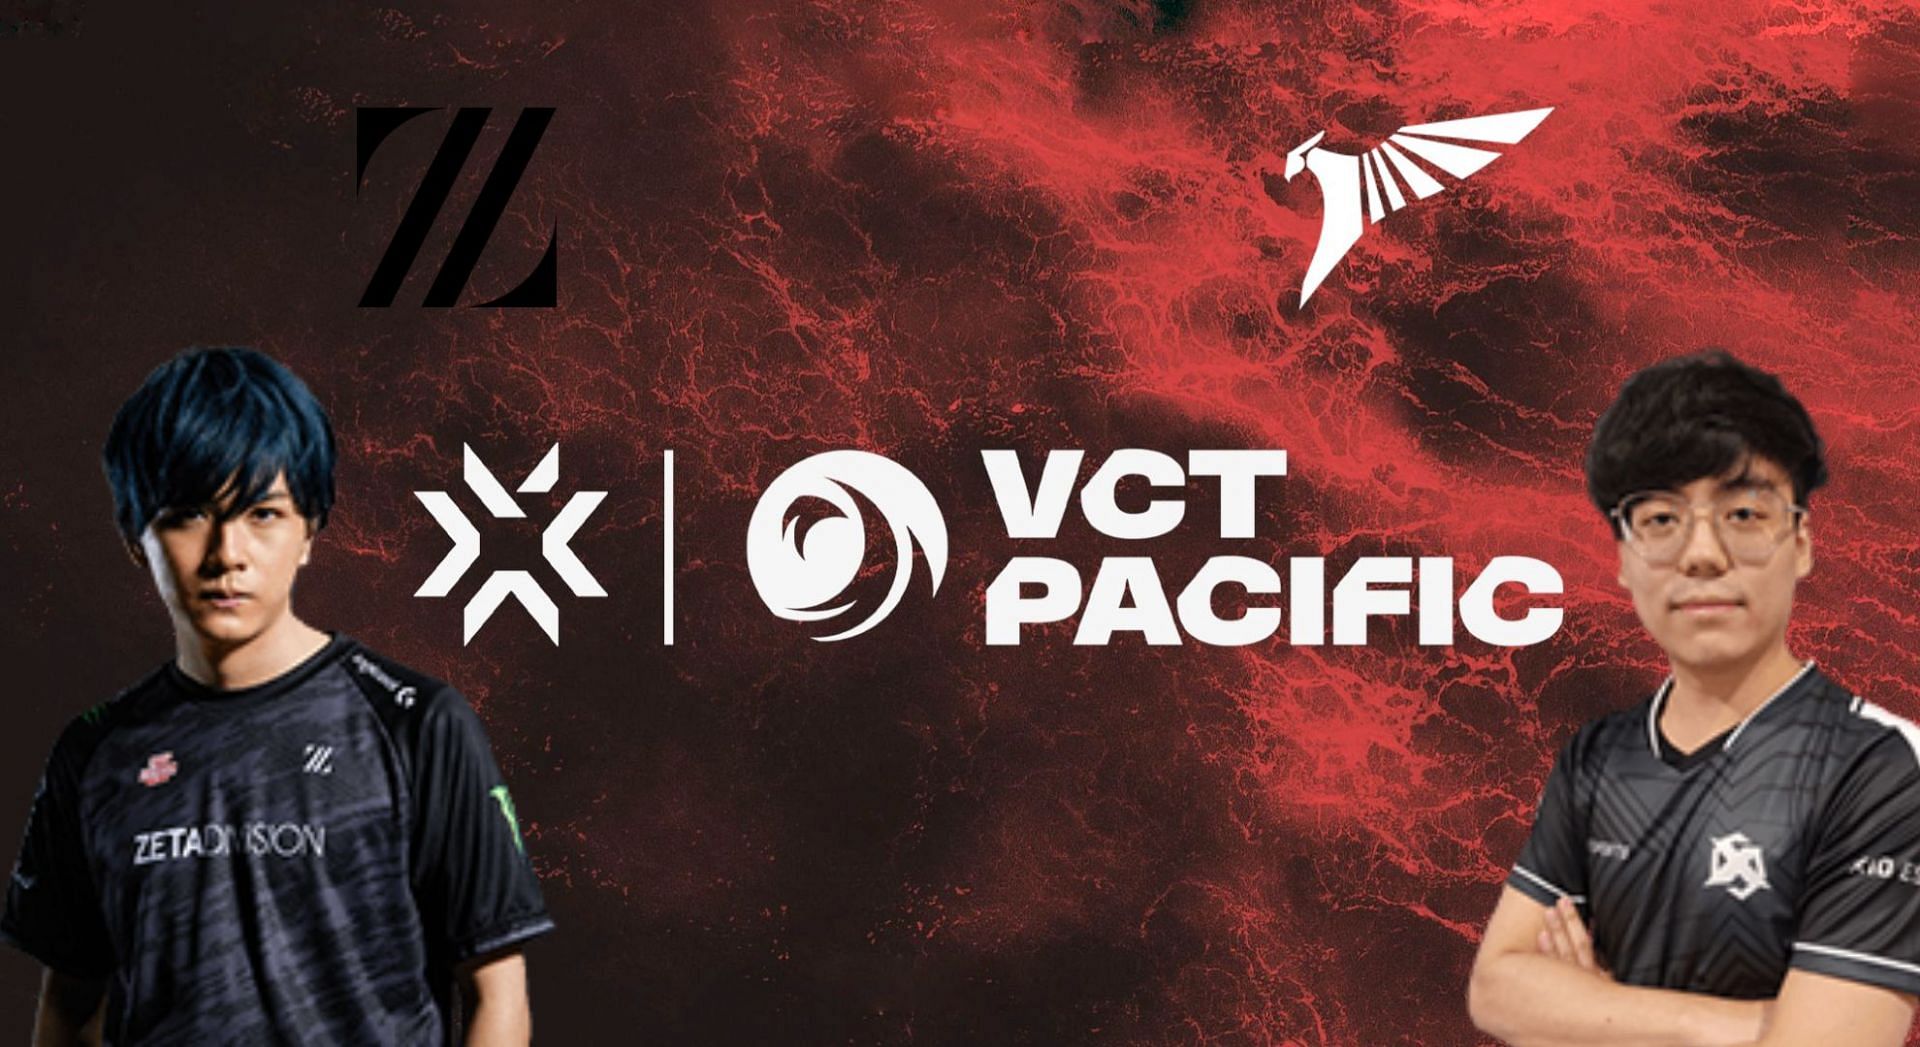 ZETA DIVISION vs Talon Esports - VCT Pacific League: Predictions, where to watch, and more(image via Sportskeeda)